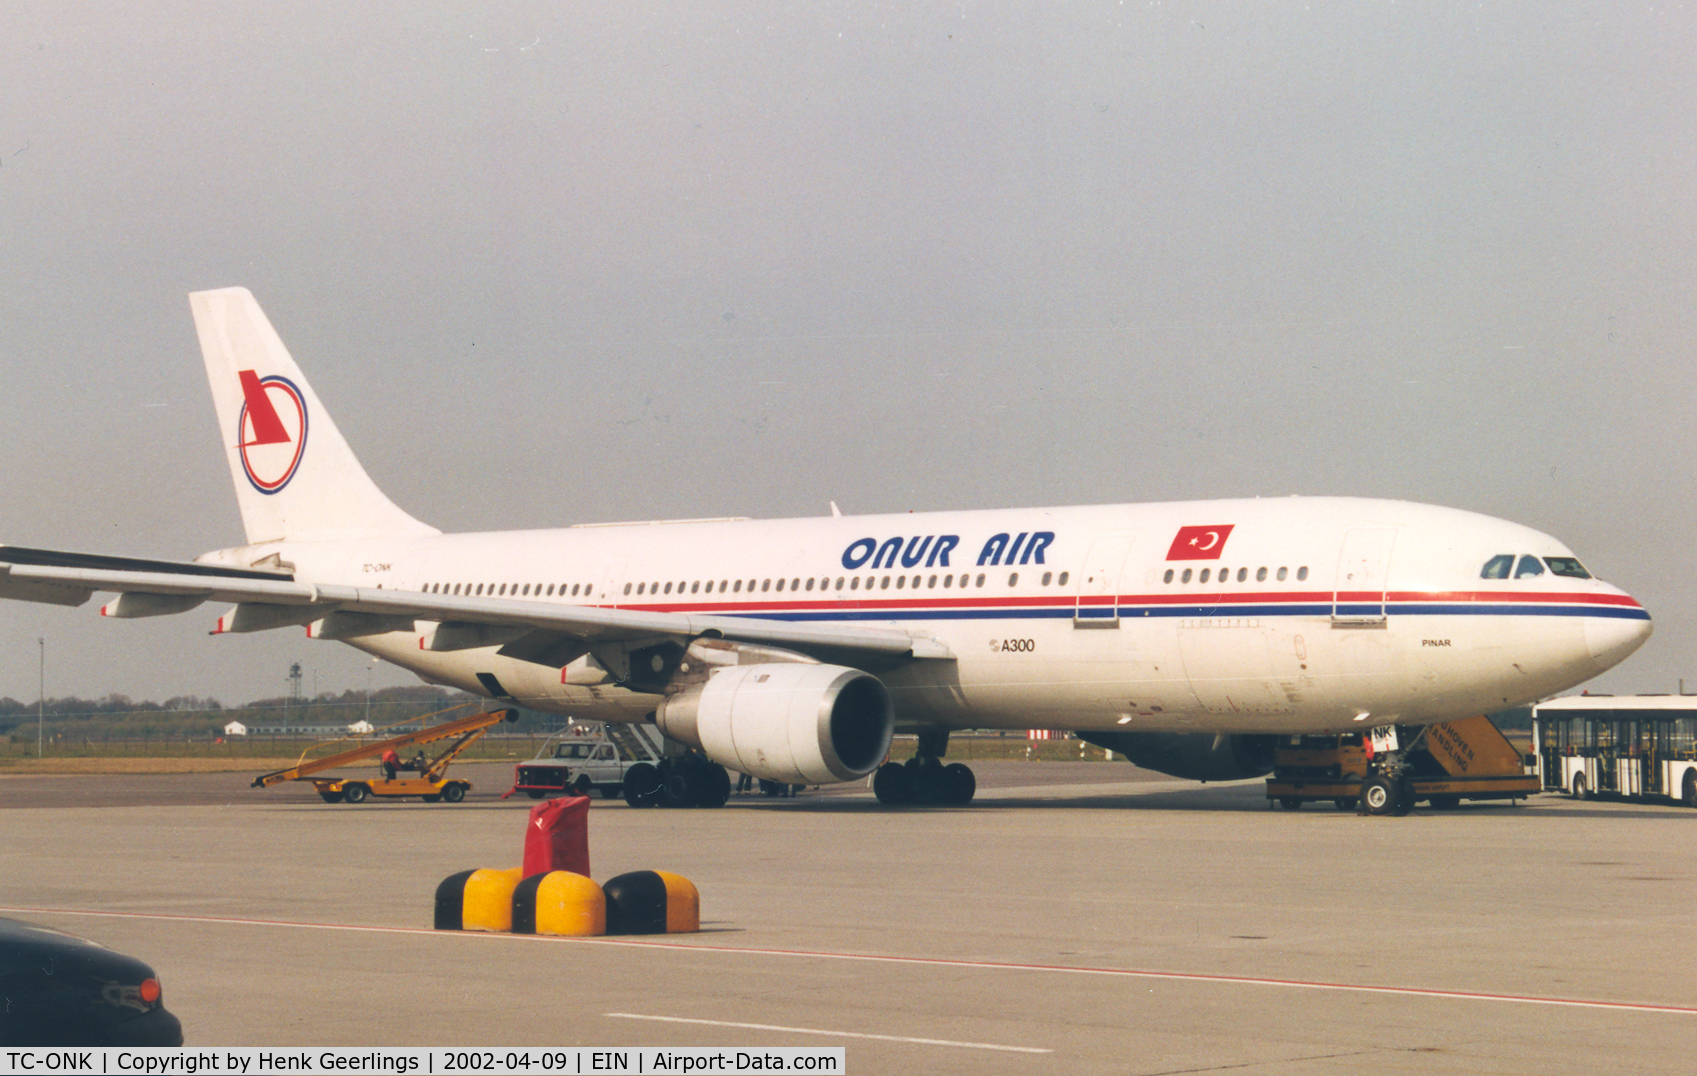 TC-ONK, Airbus A300B4-103 C/N 086, Onur Air - Eindhoven Airport